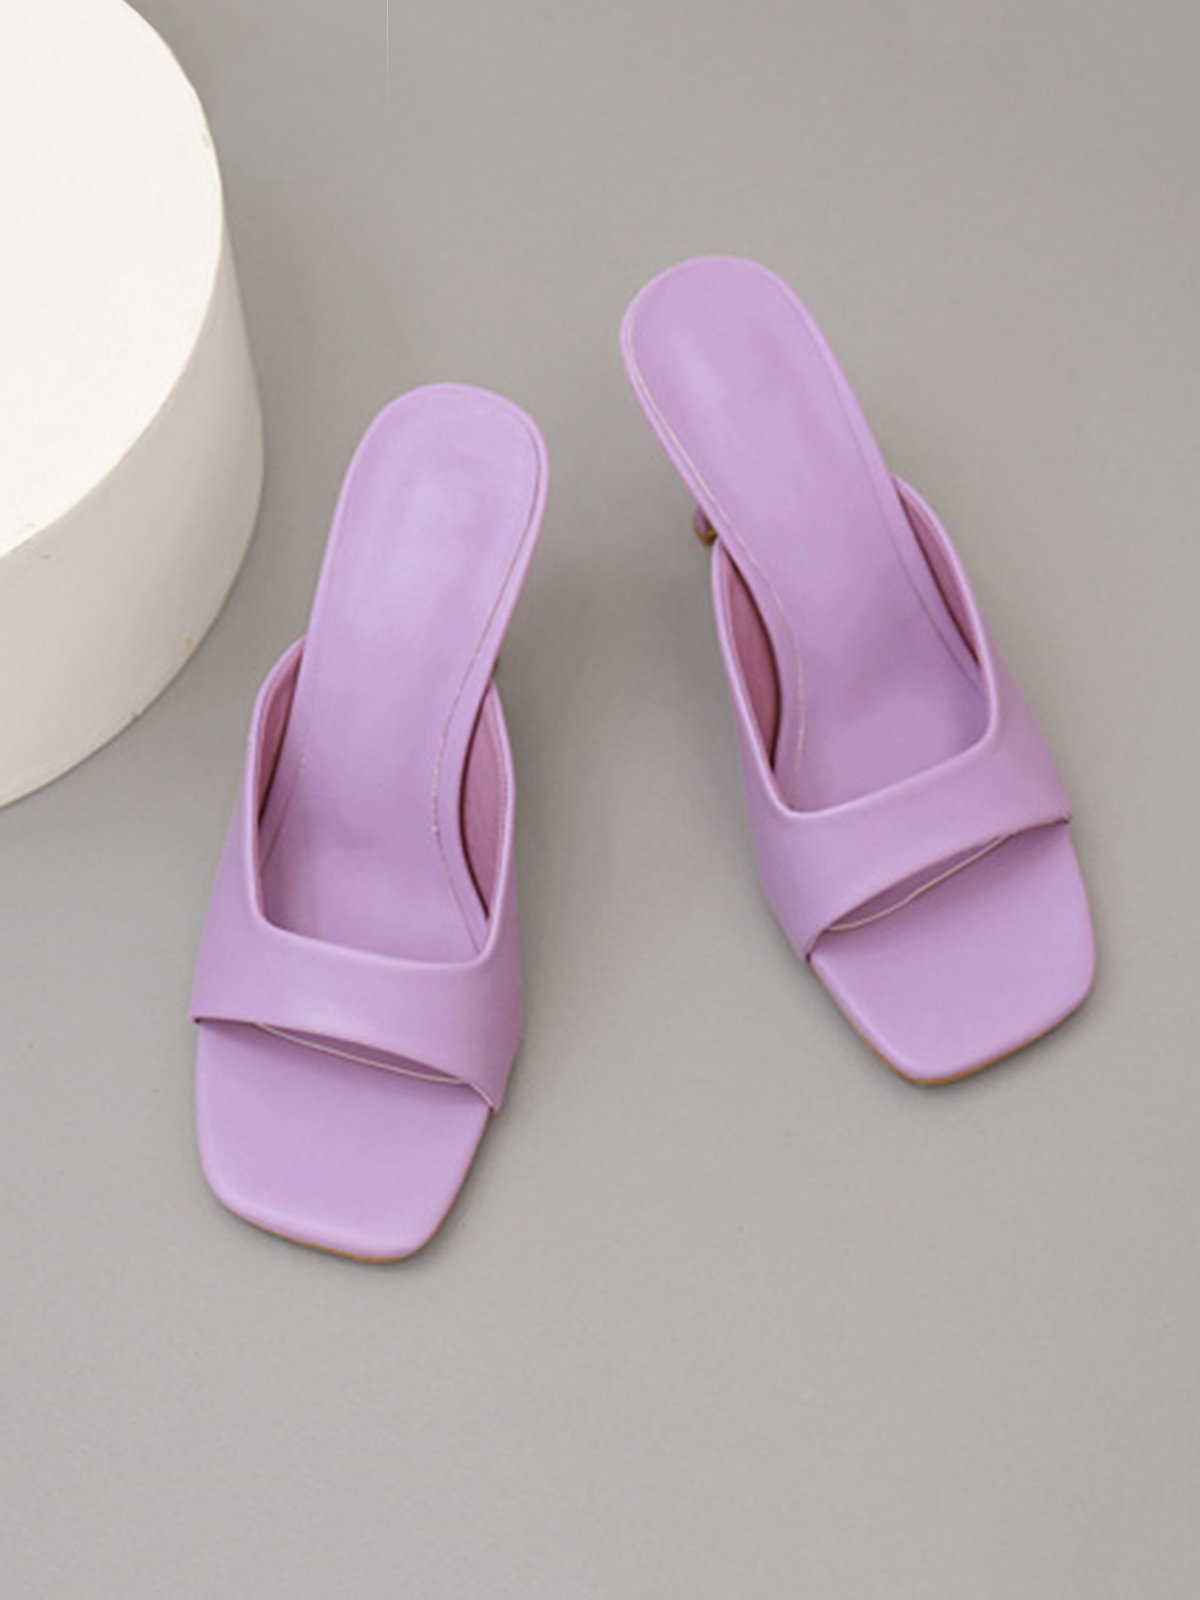 Minimalist Square Toe Stiletto Heel Mule Sandals